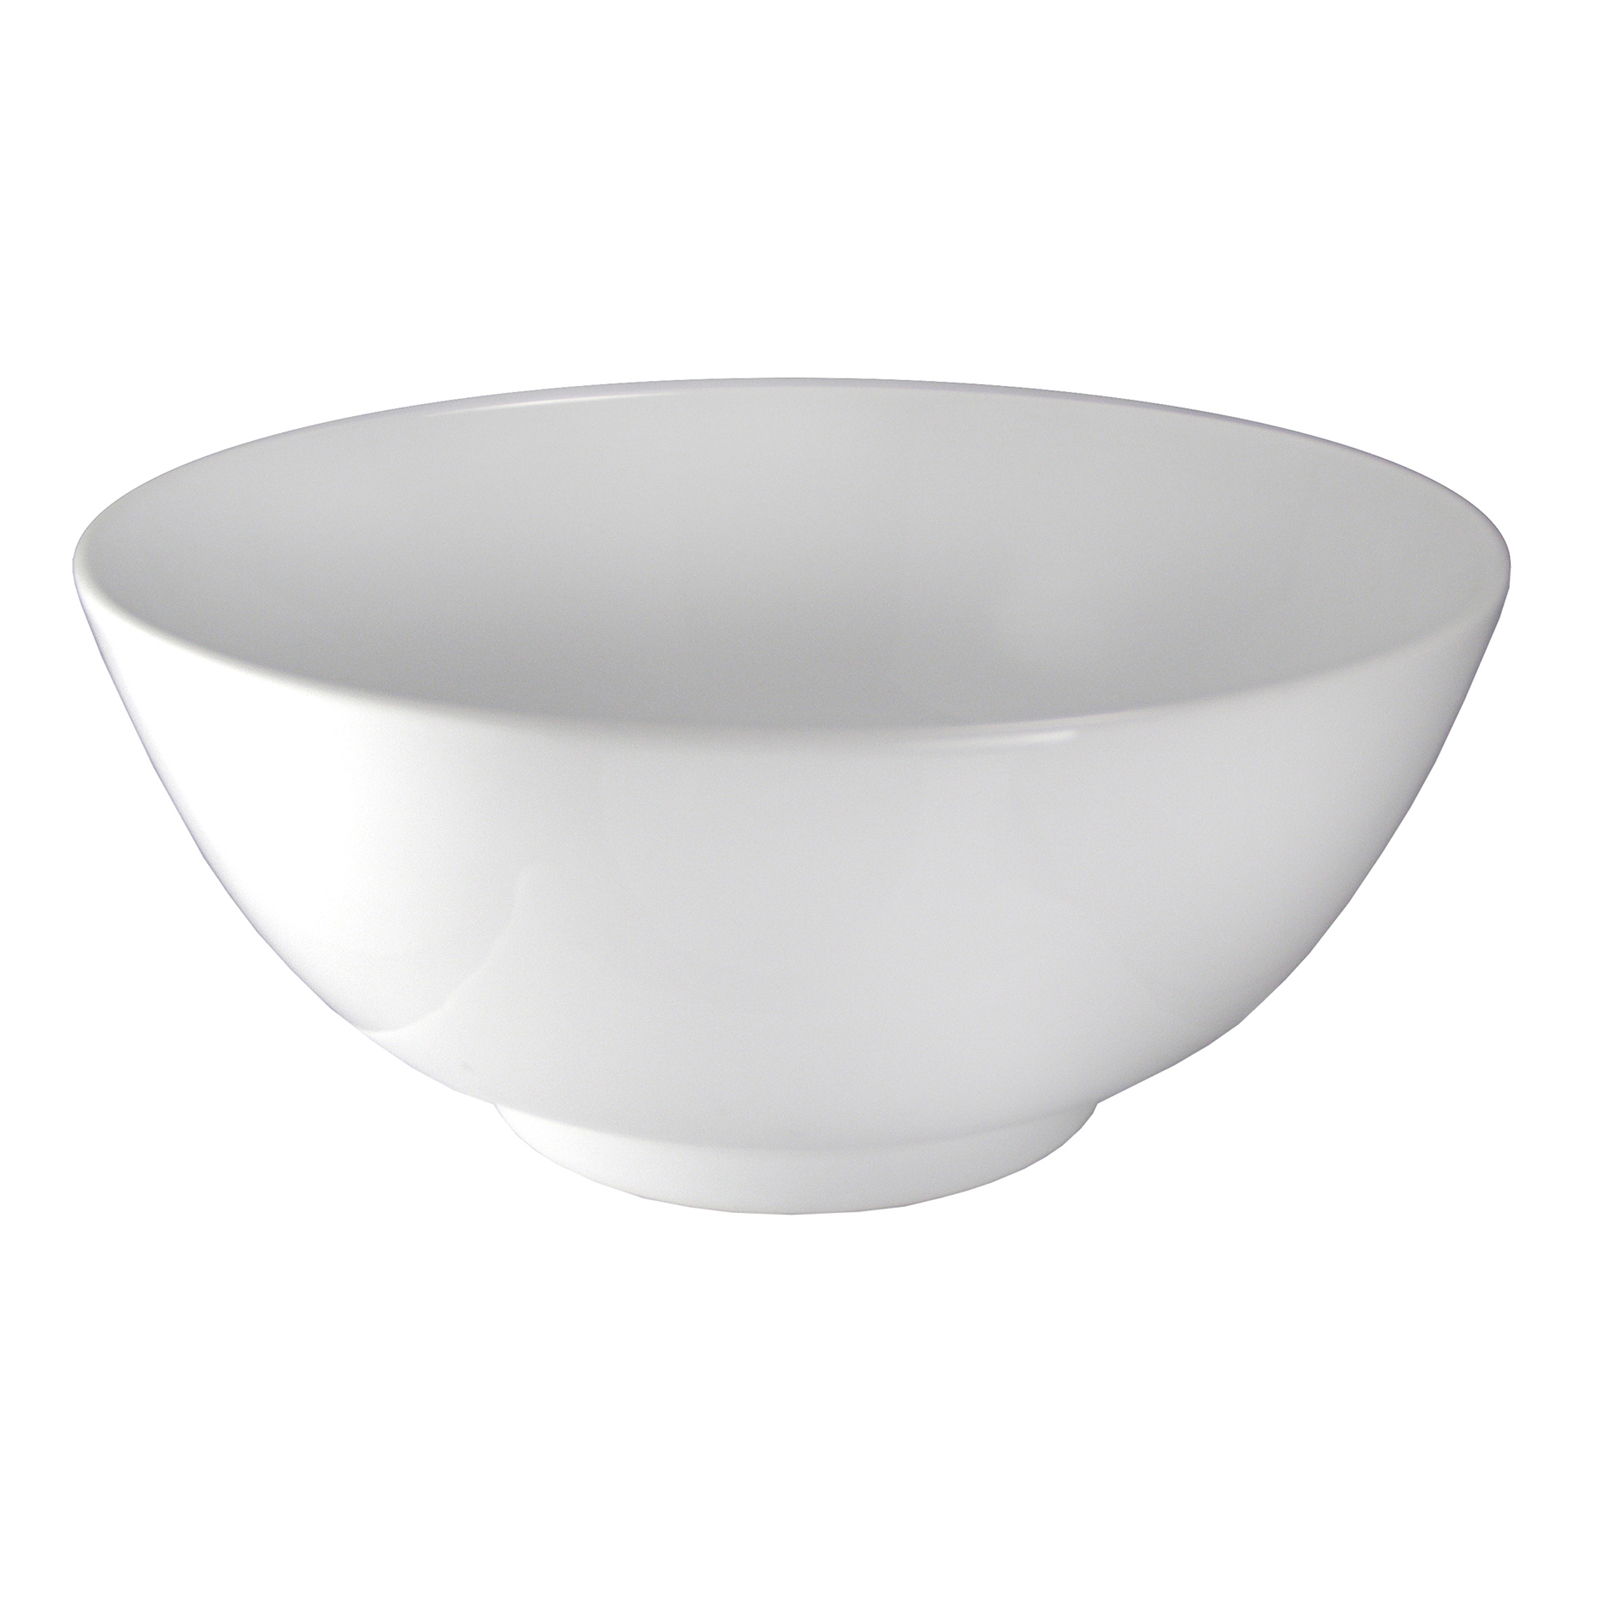 9 inch serving bowl